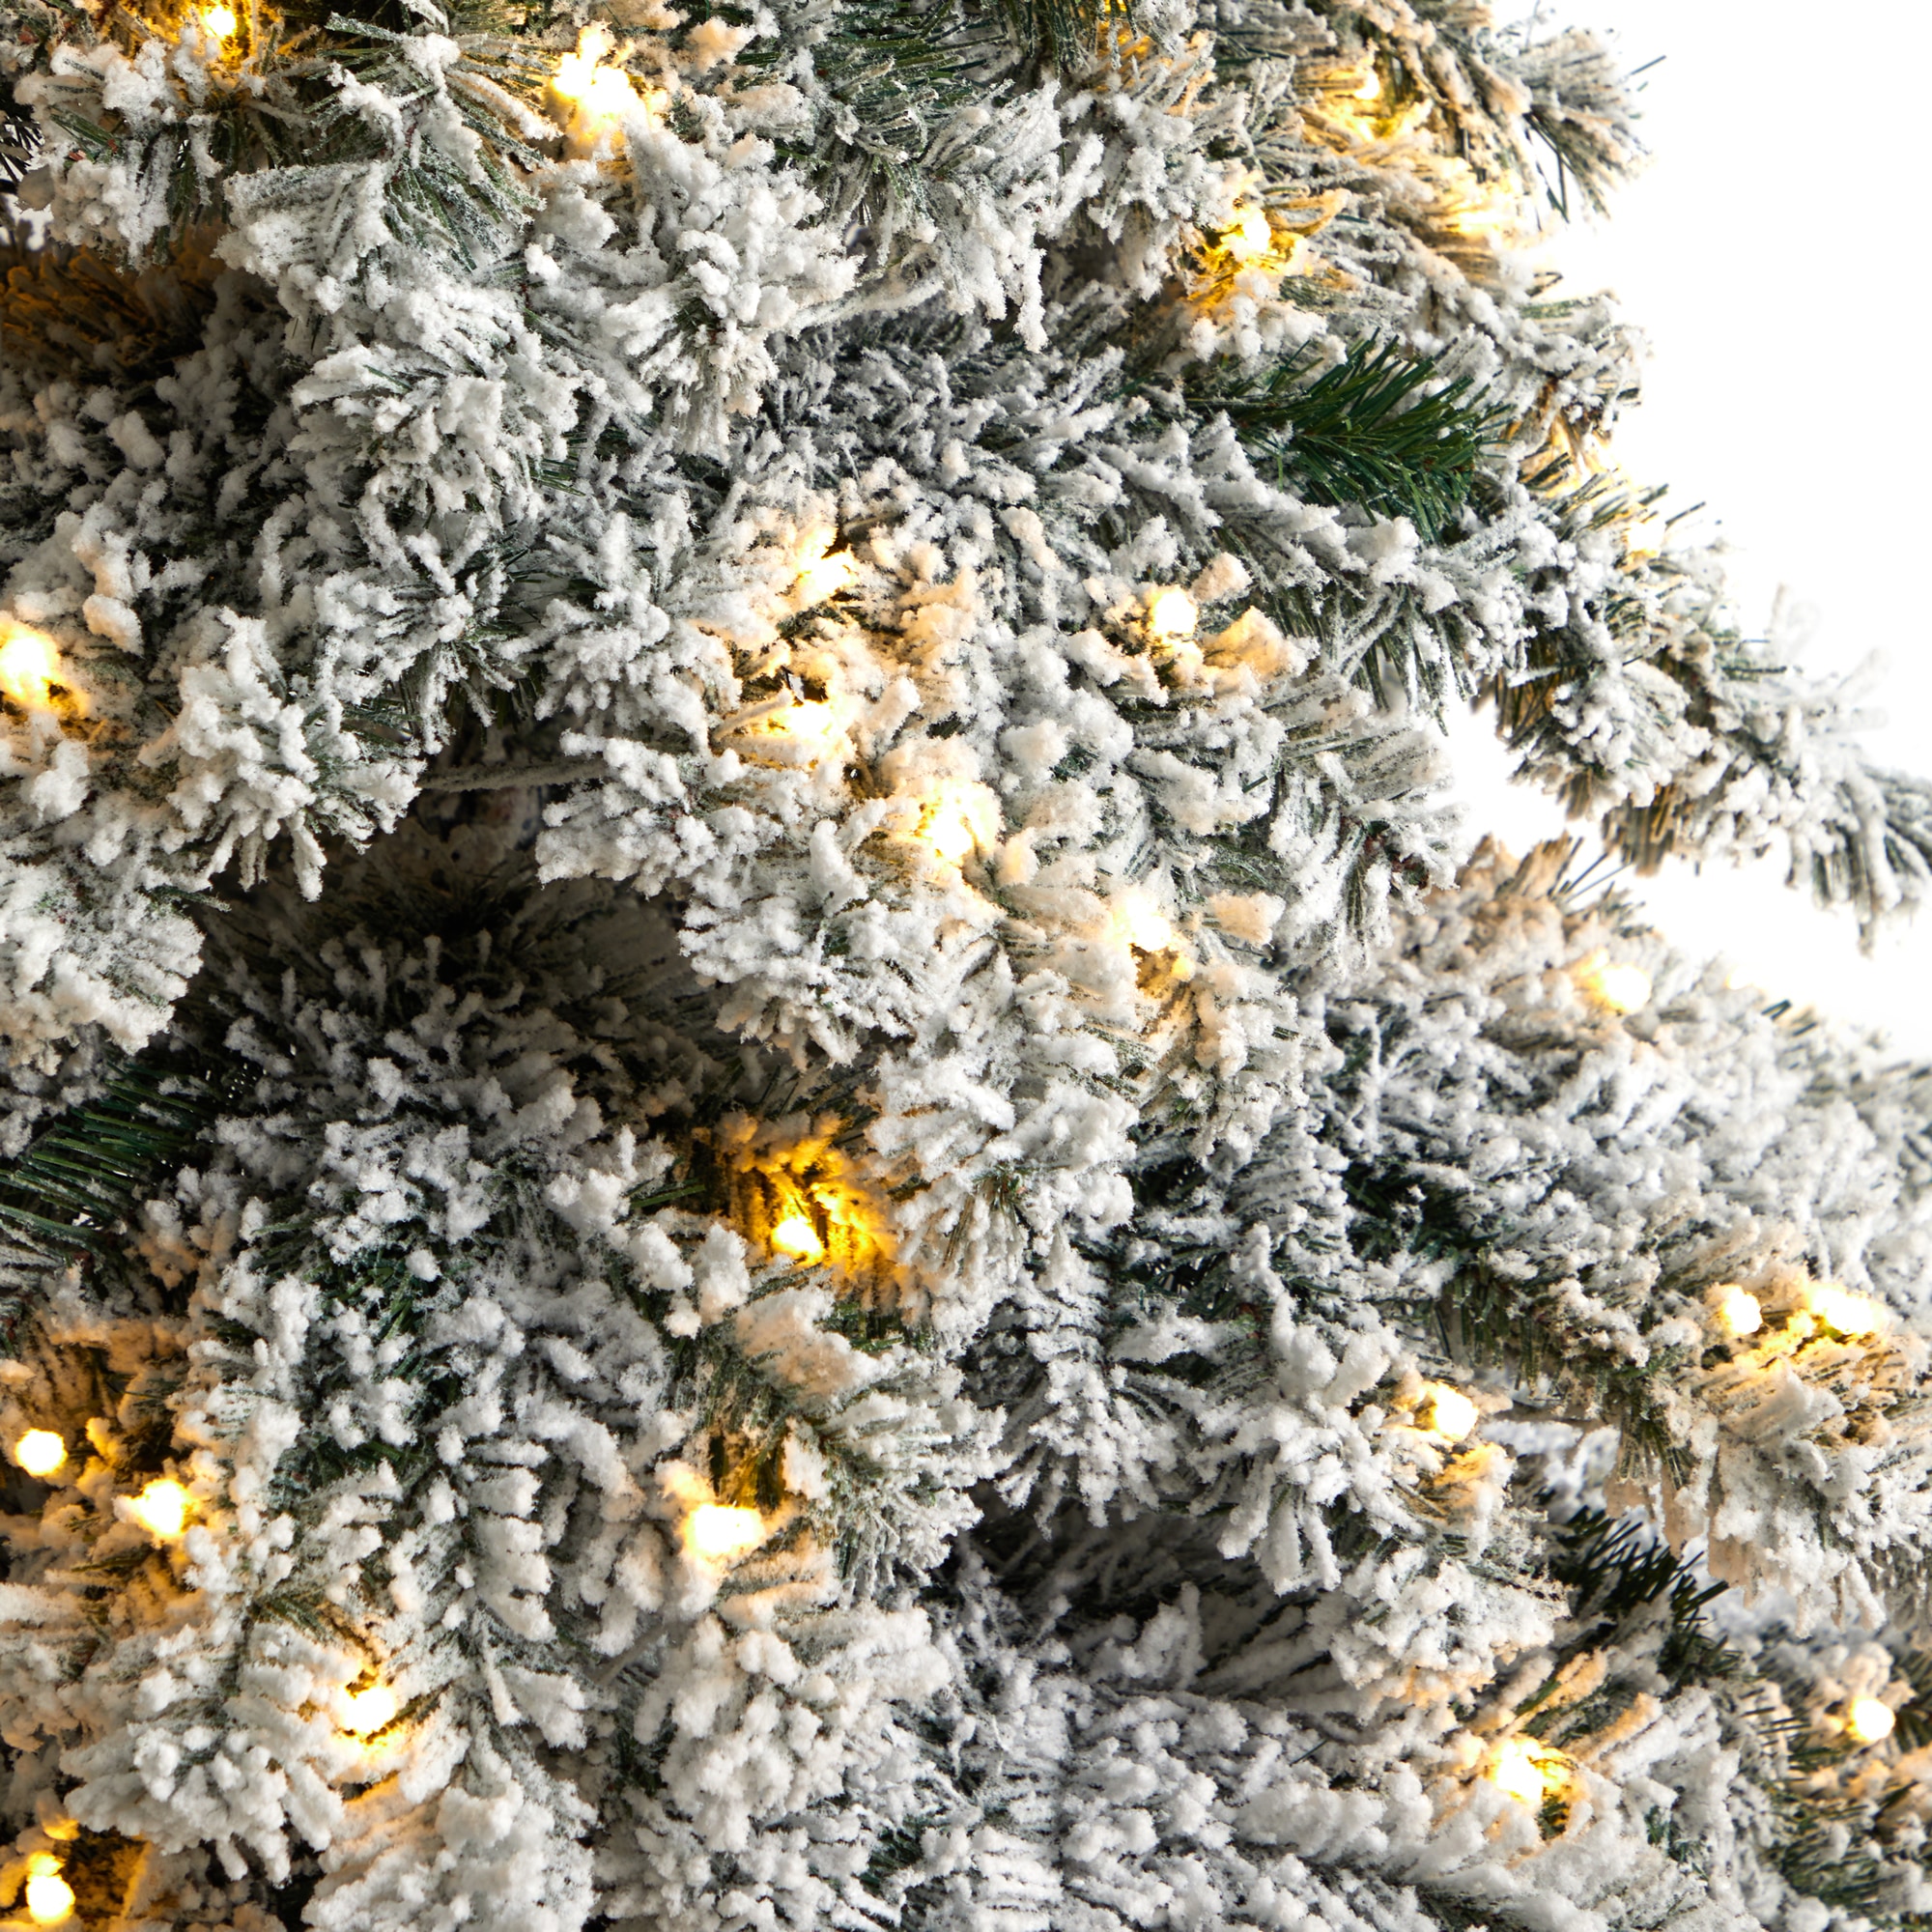 Nearly Natural 7-ft Douglas Fir Pre-lit Flocked Artificial Christmas ...